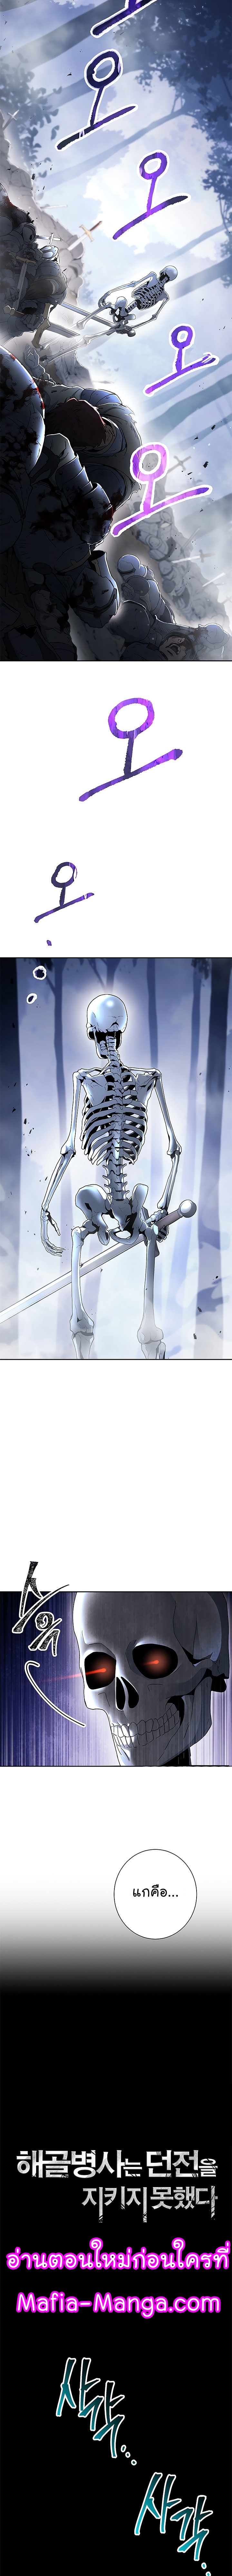 Skeleton Soldier 125 04